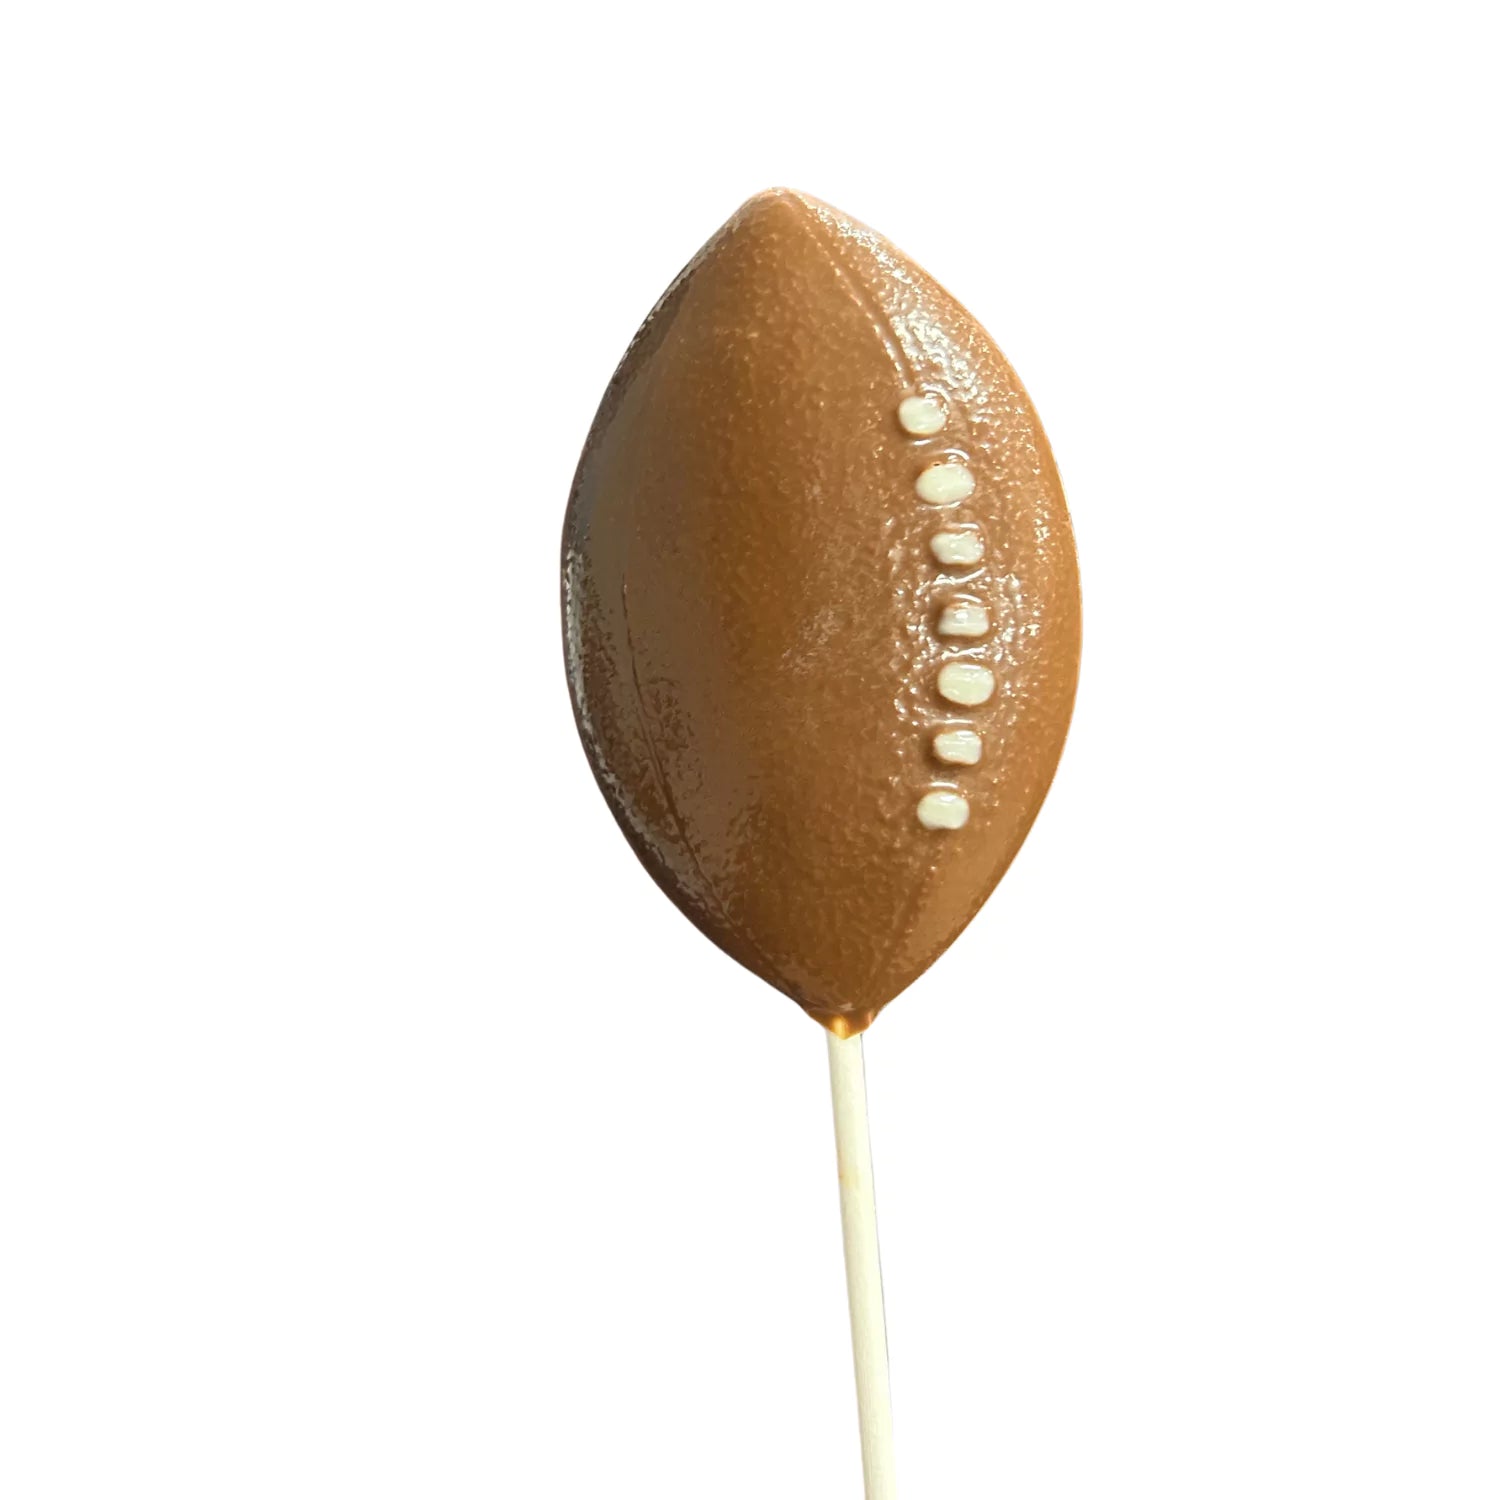 Football with White Laces Milk Chocolate Lollipop Sucker 1.4oz Milk Chocolate